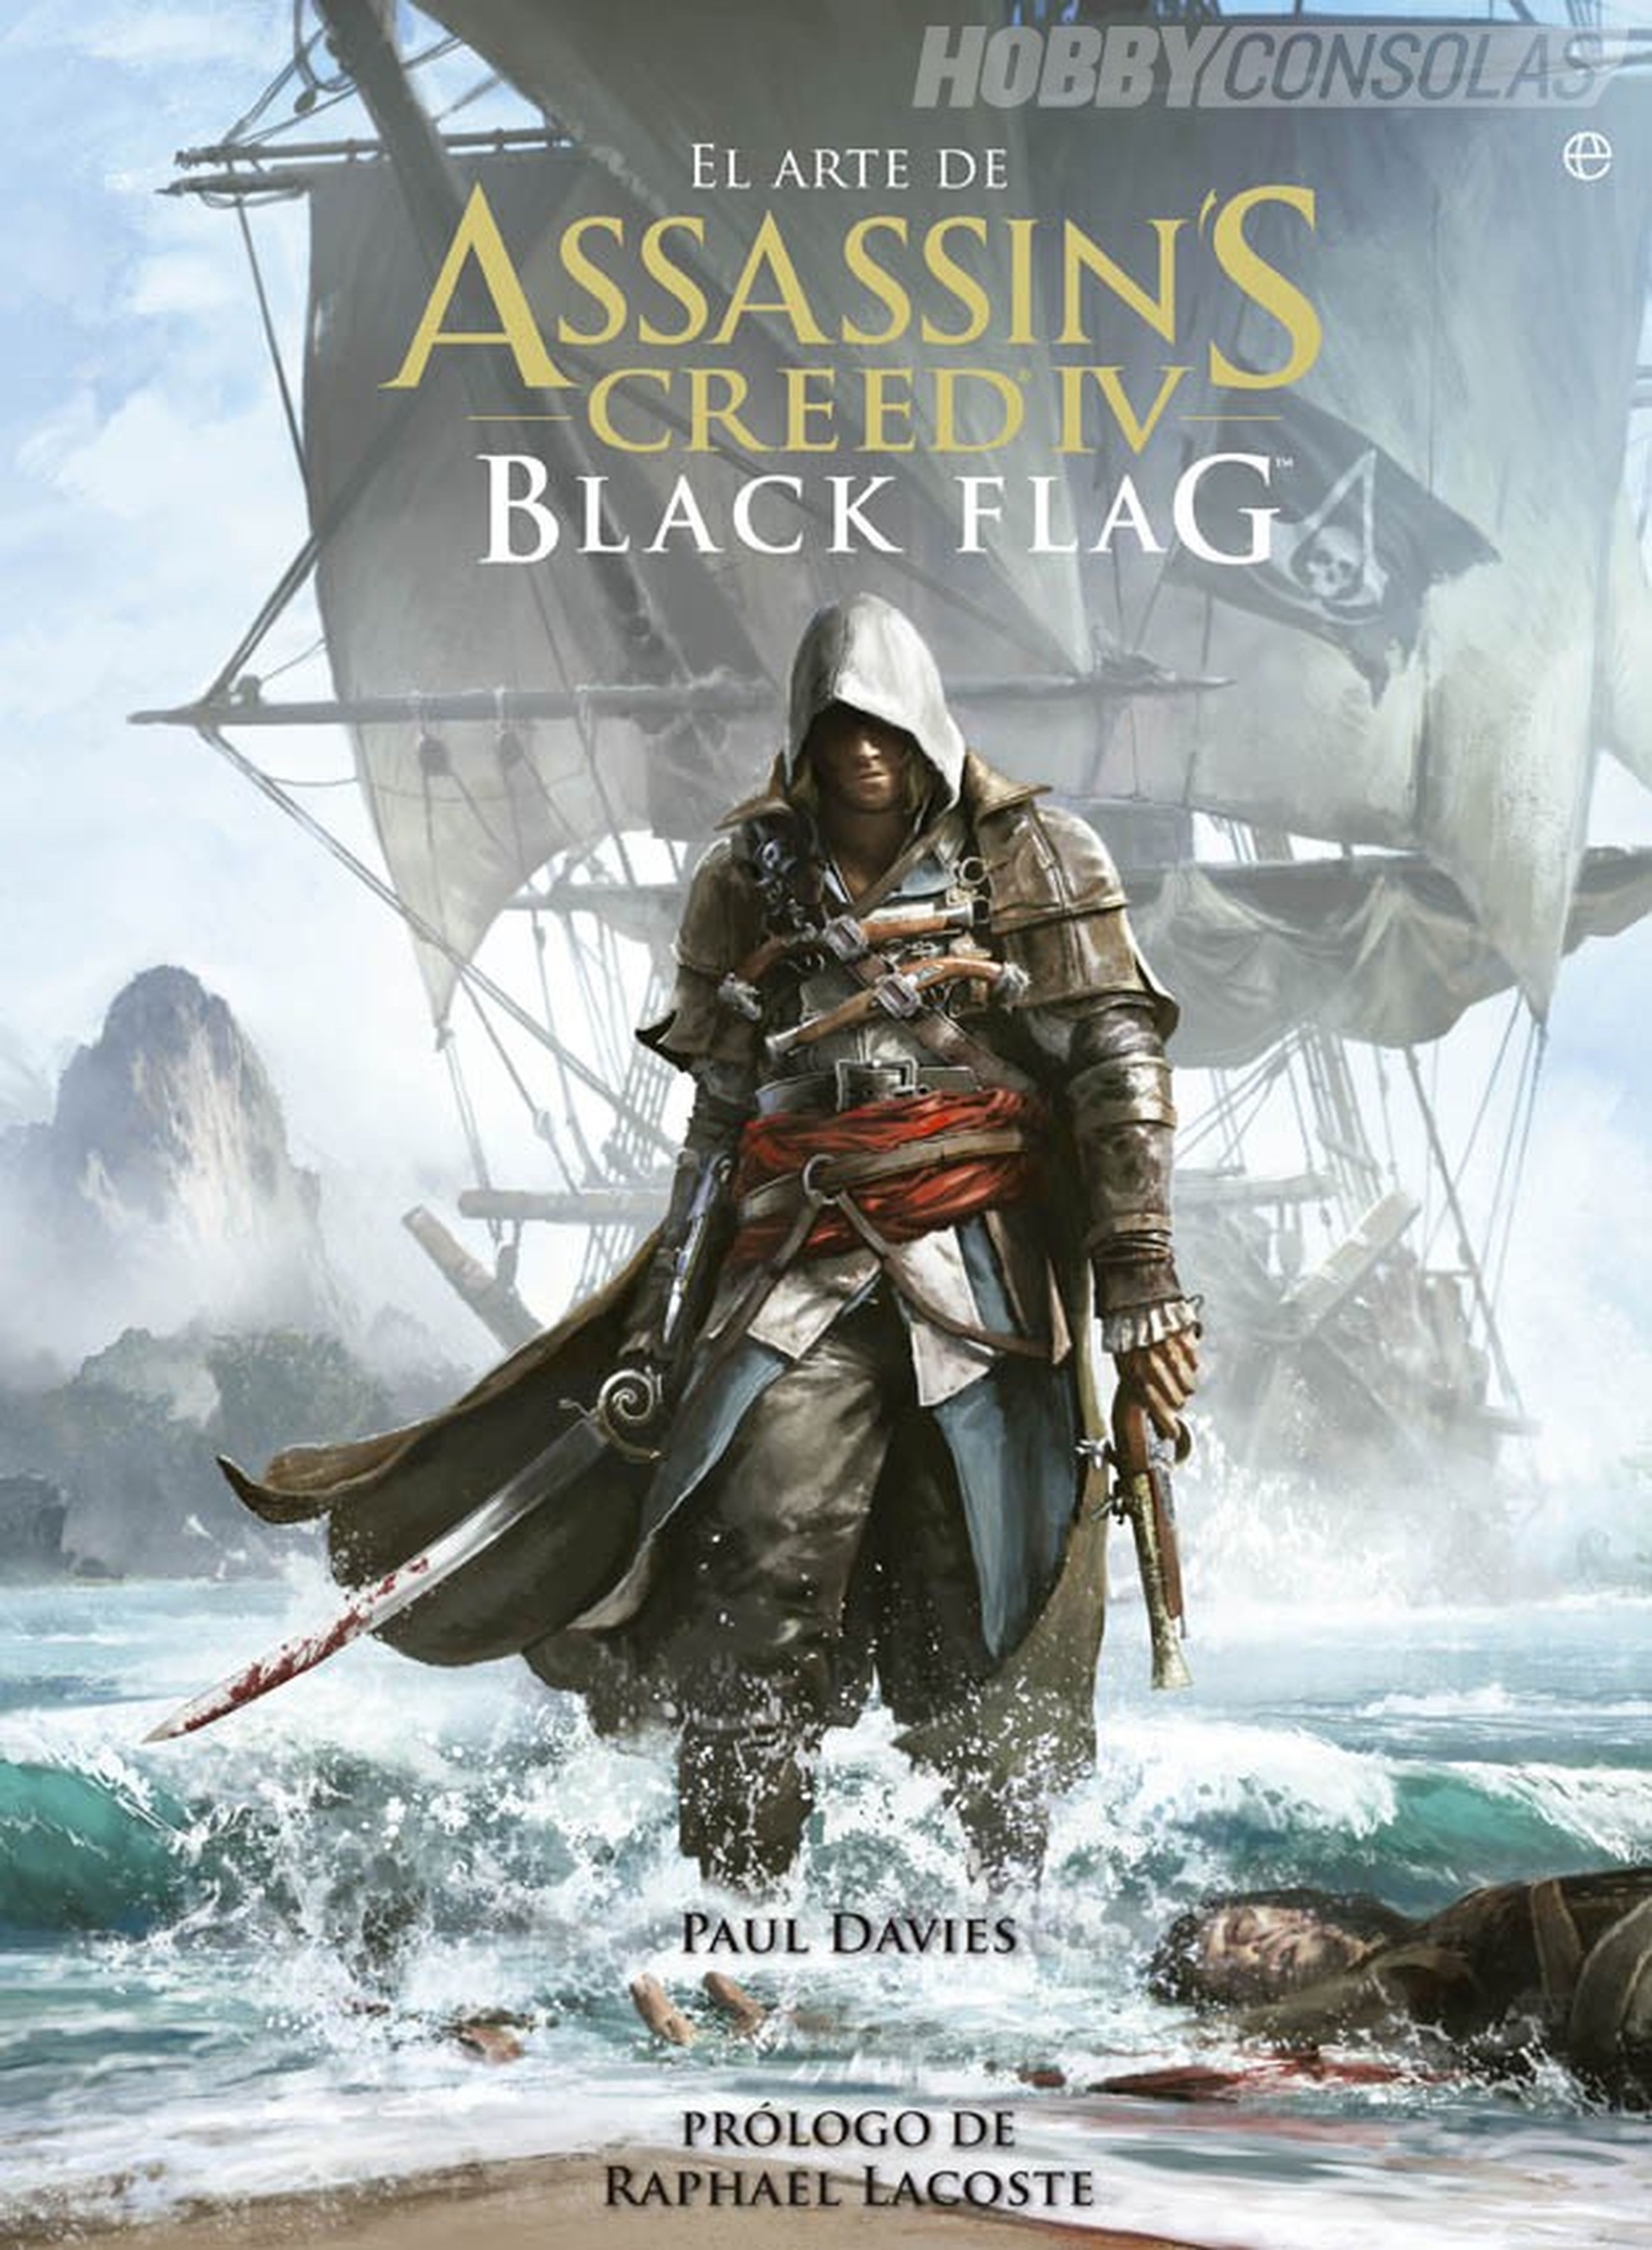 El libro de arte de Assassin's Creed 4 Black Flag